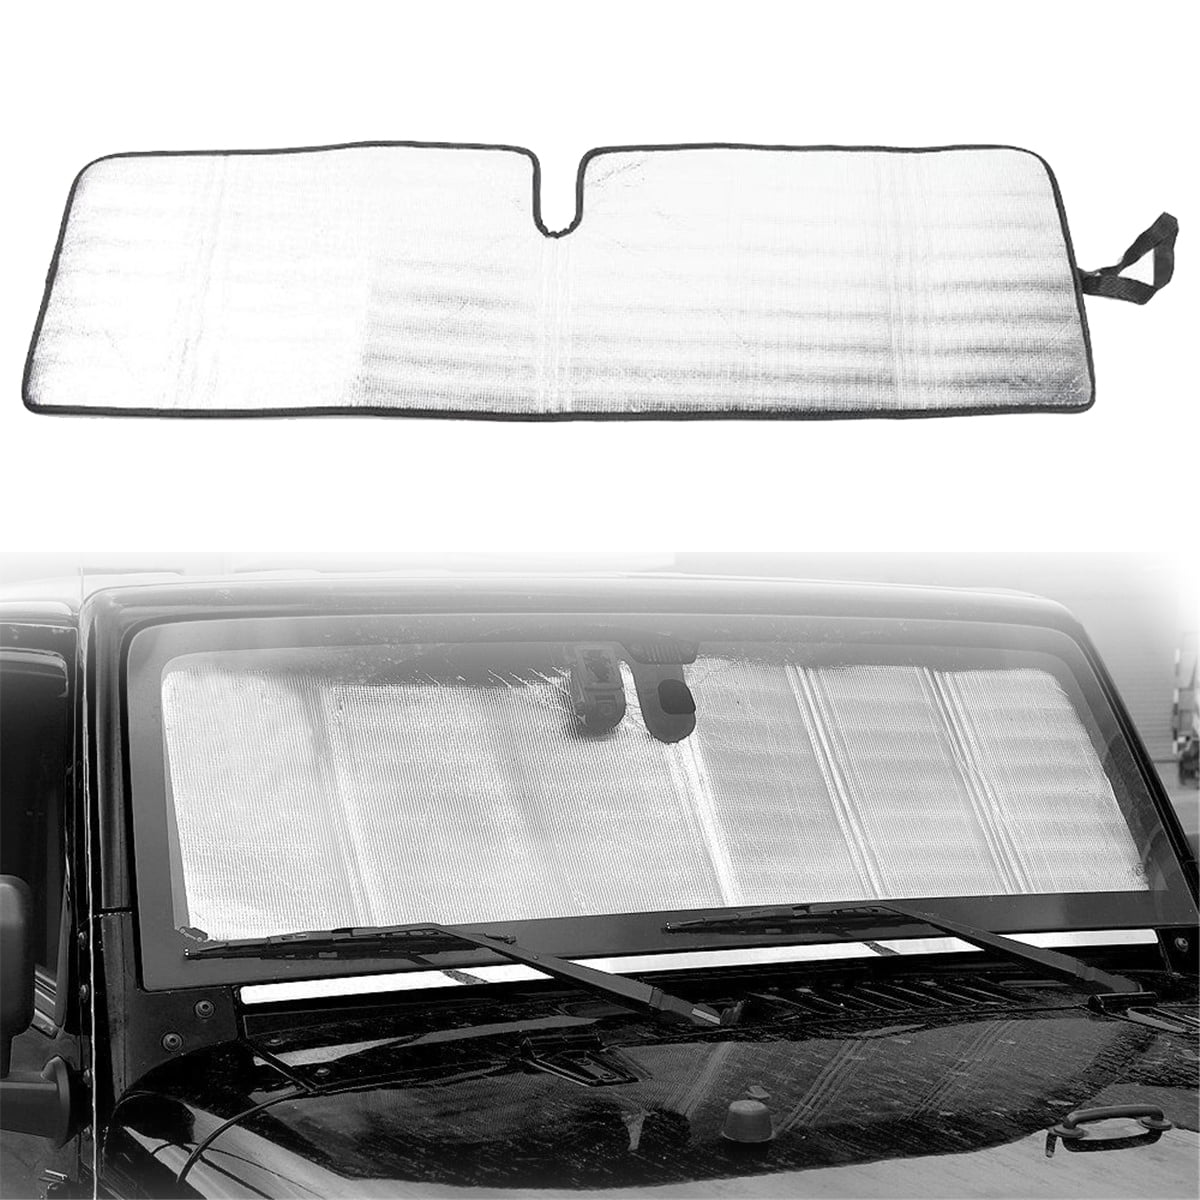 NEAER Windshield Sun Shade Car Front Window Sun Shade for Car Truck SUV Best UV Ray Visor Protector 